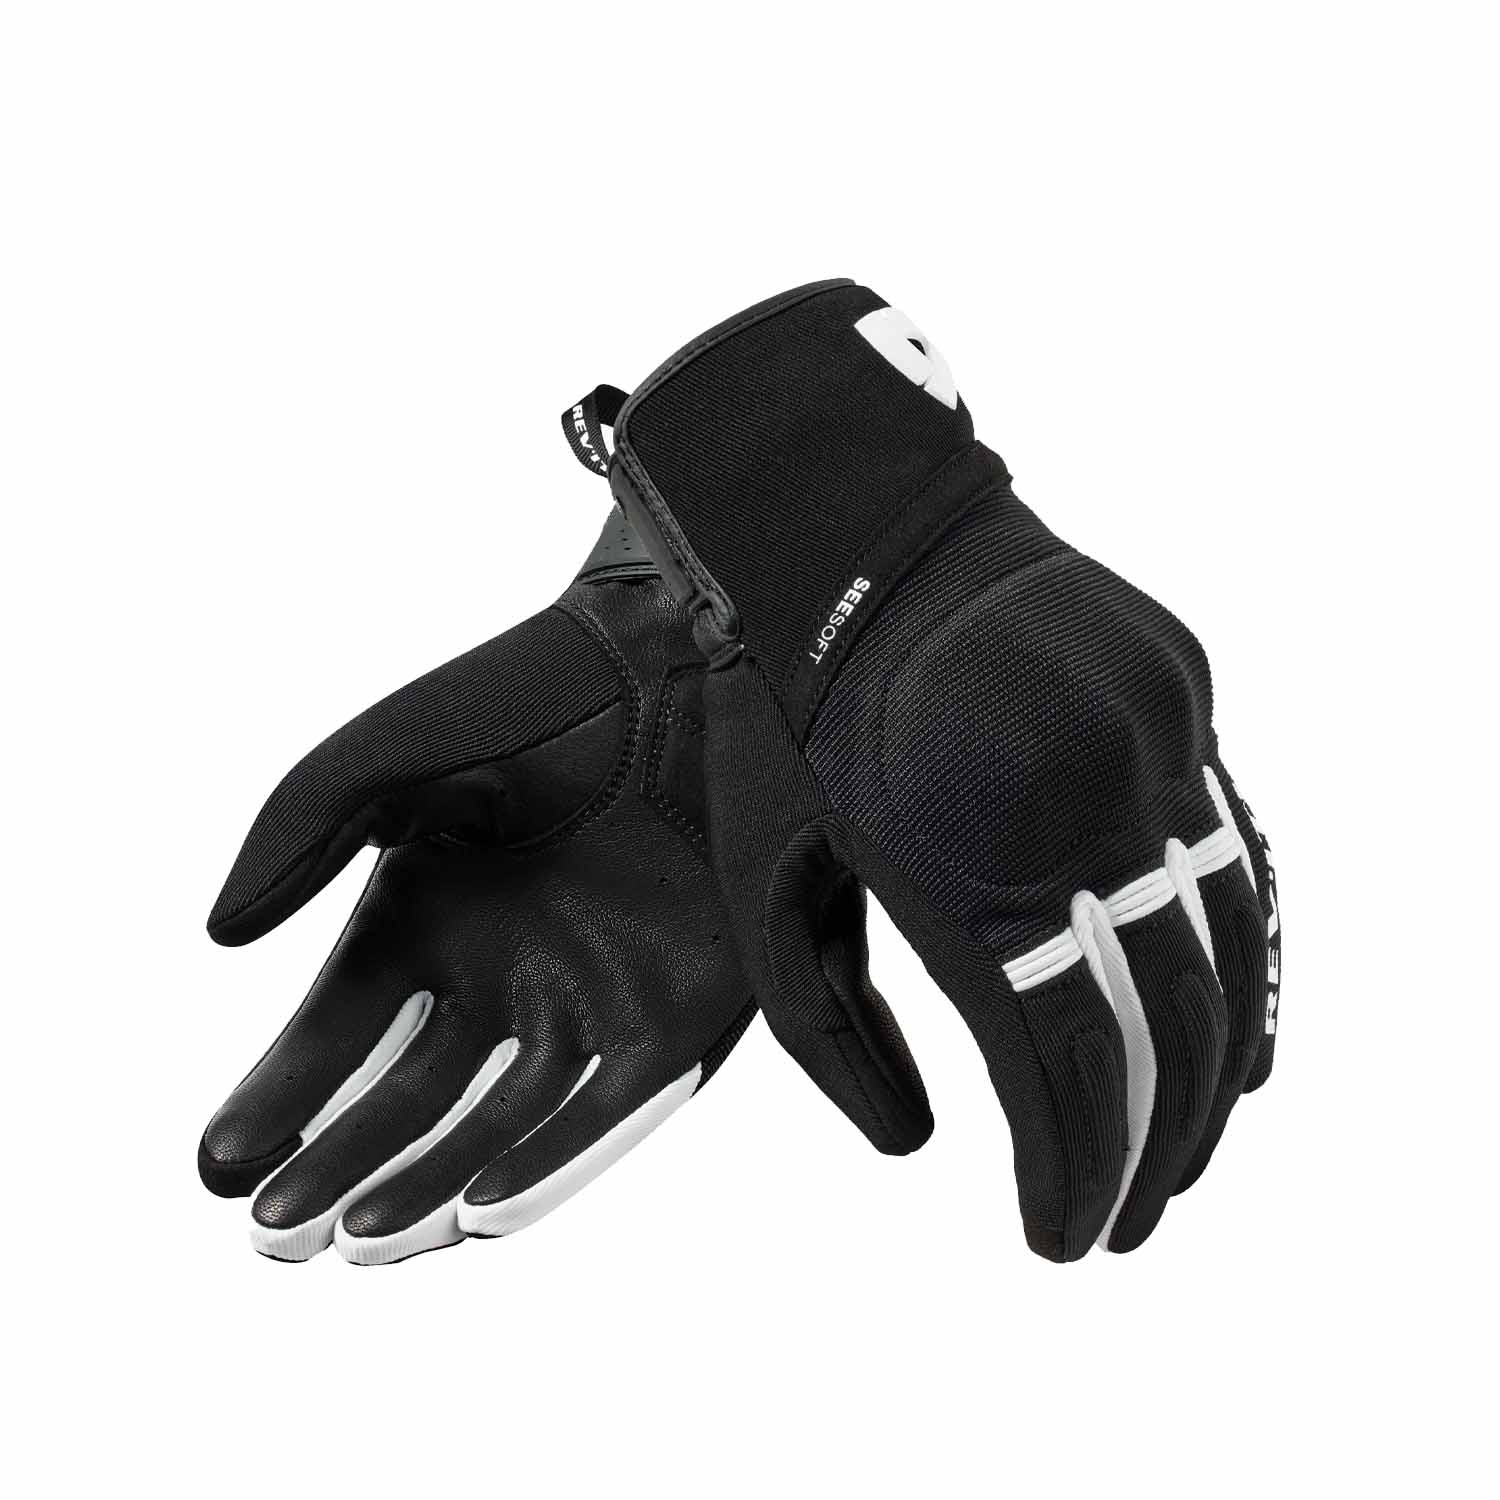 Image of REV'IT! Mosca 2 Gloves Black White Größe 3XL